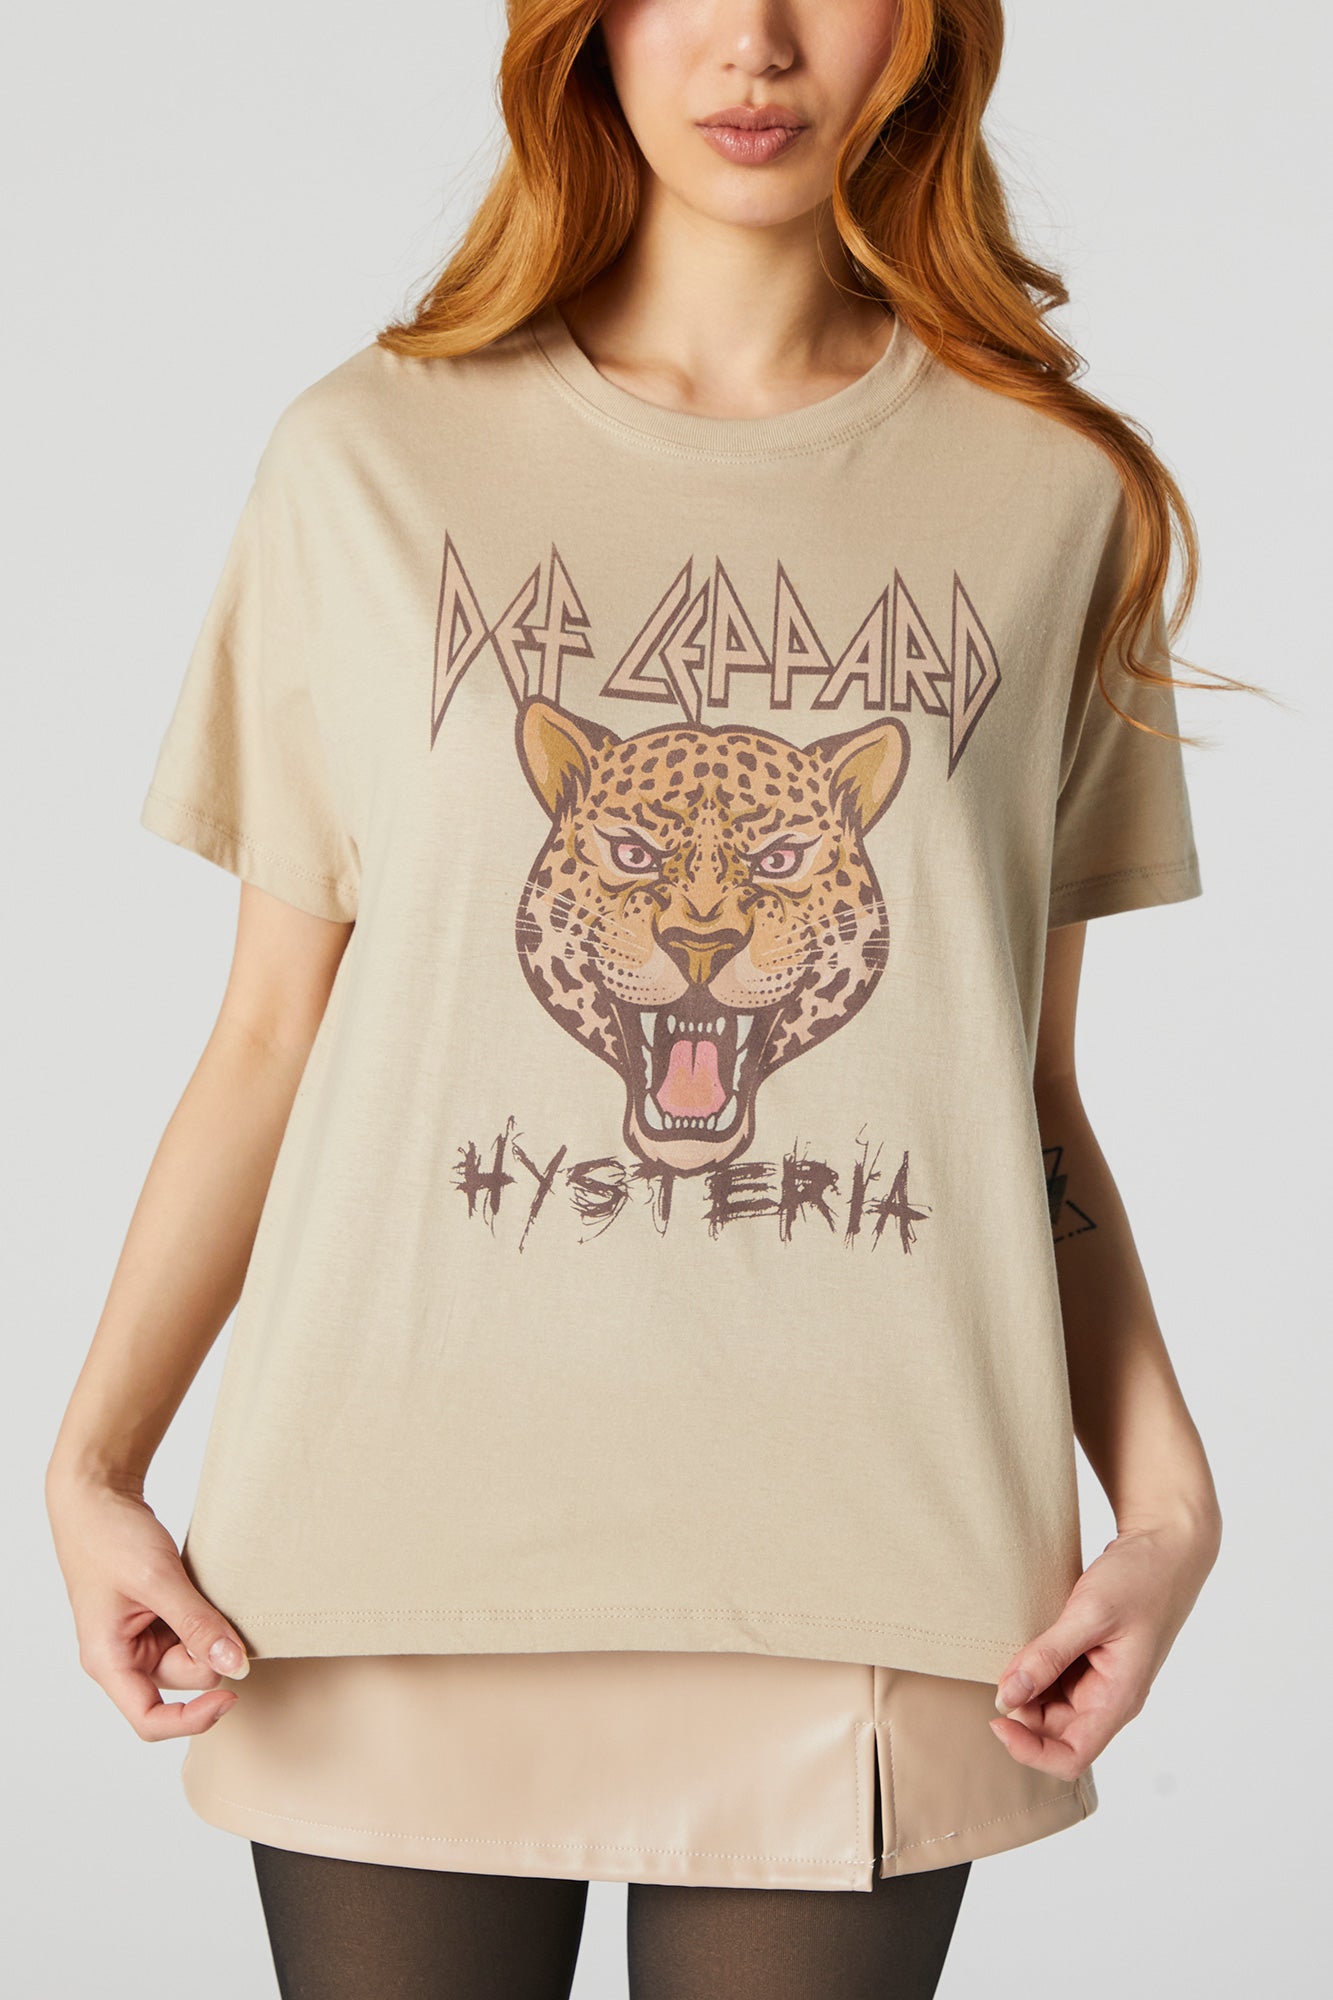 Def Leppard Hysteria Graphic Boyfriend T-Shirt